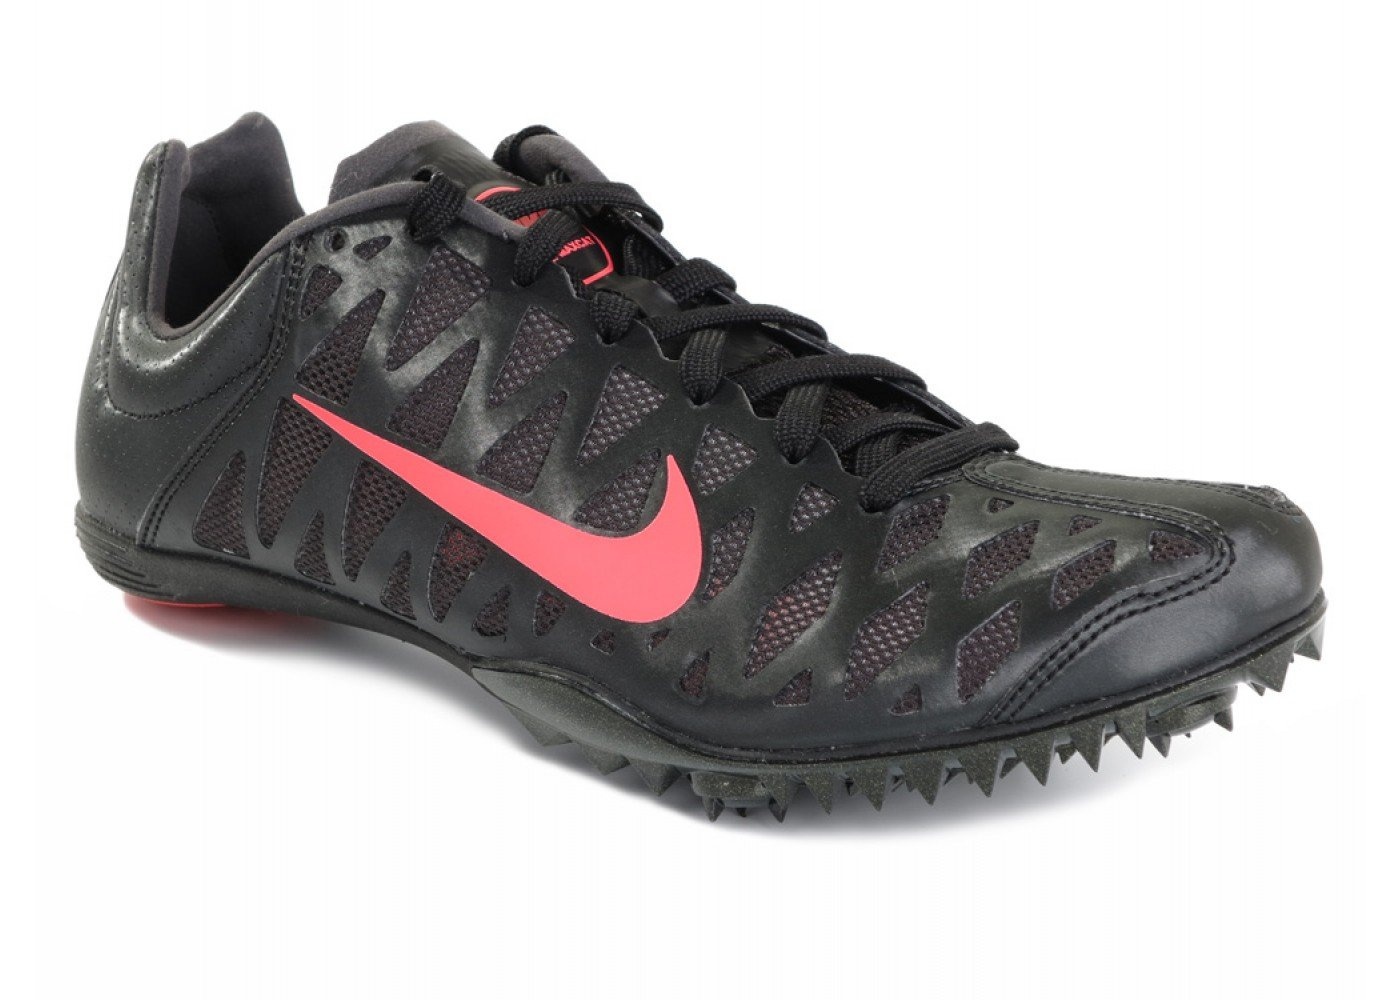 Nike Zoom Maxcat 4 549150-060 Unisex-Erwachsene Laufschuhe Schwarz (Black/Dark Charcoal/Atomic Red 060) 47 - 47 EU